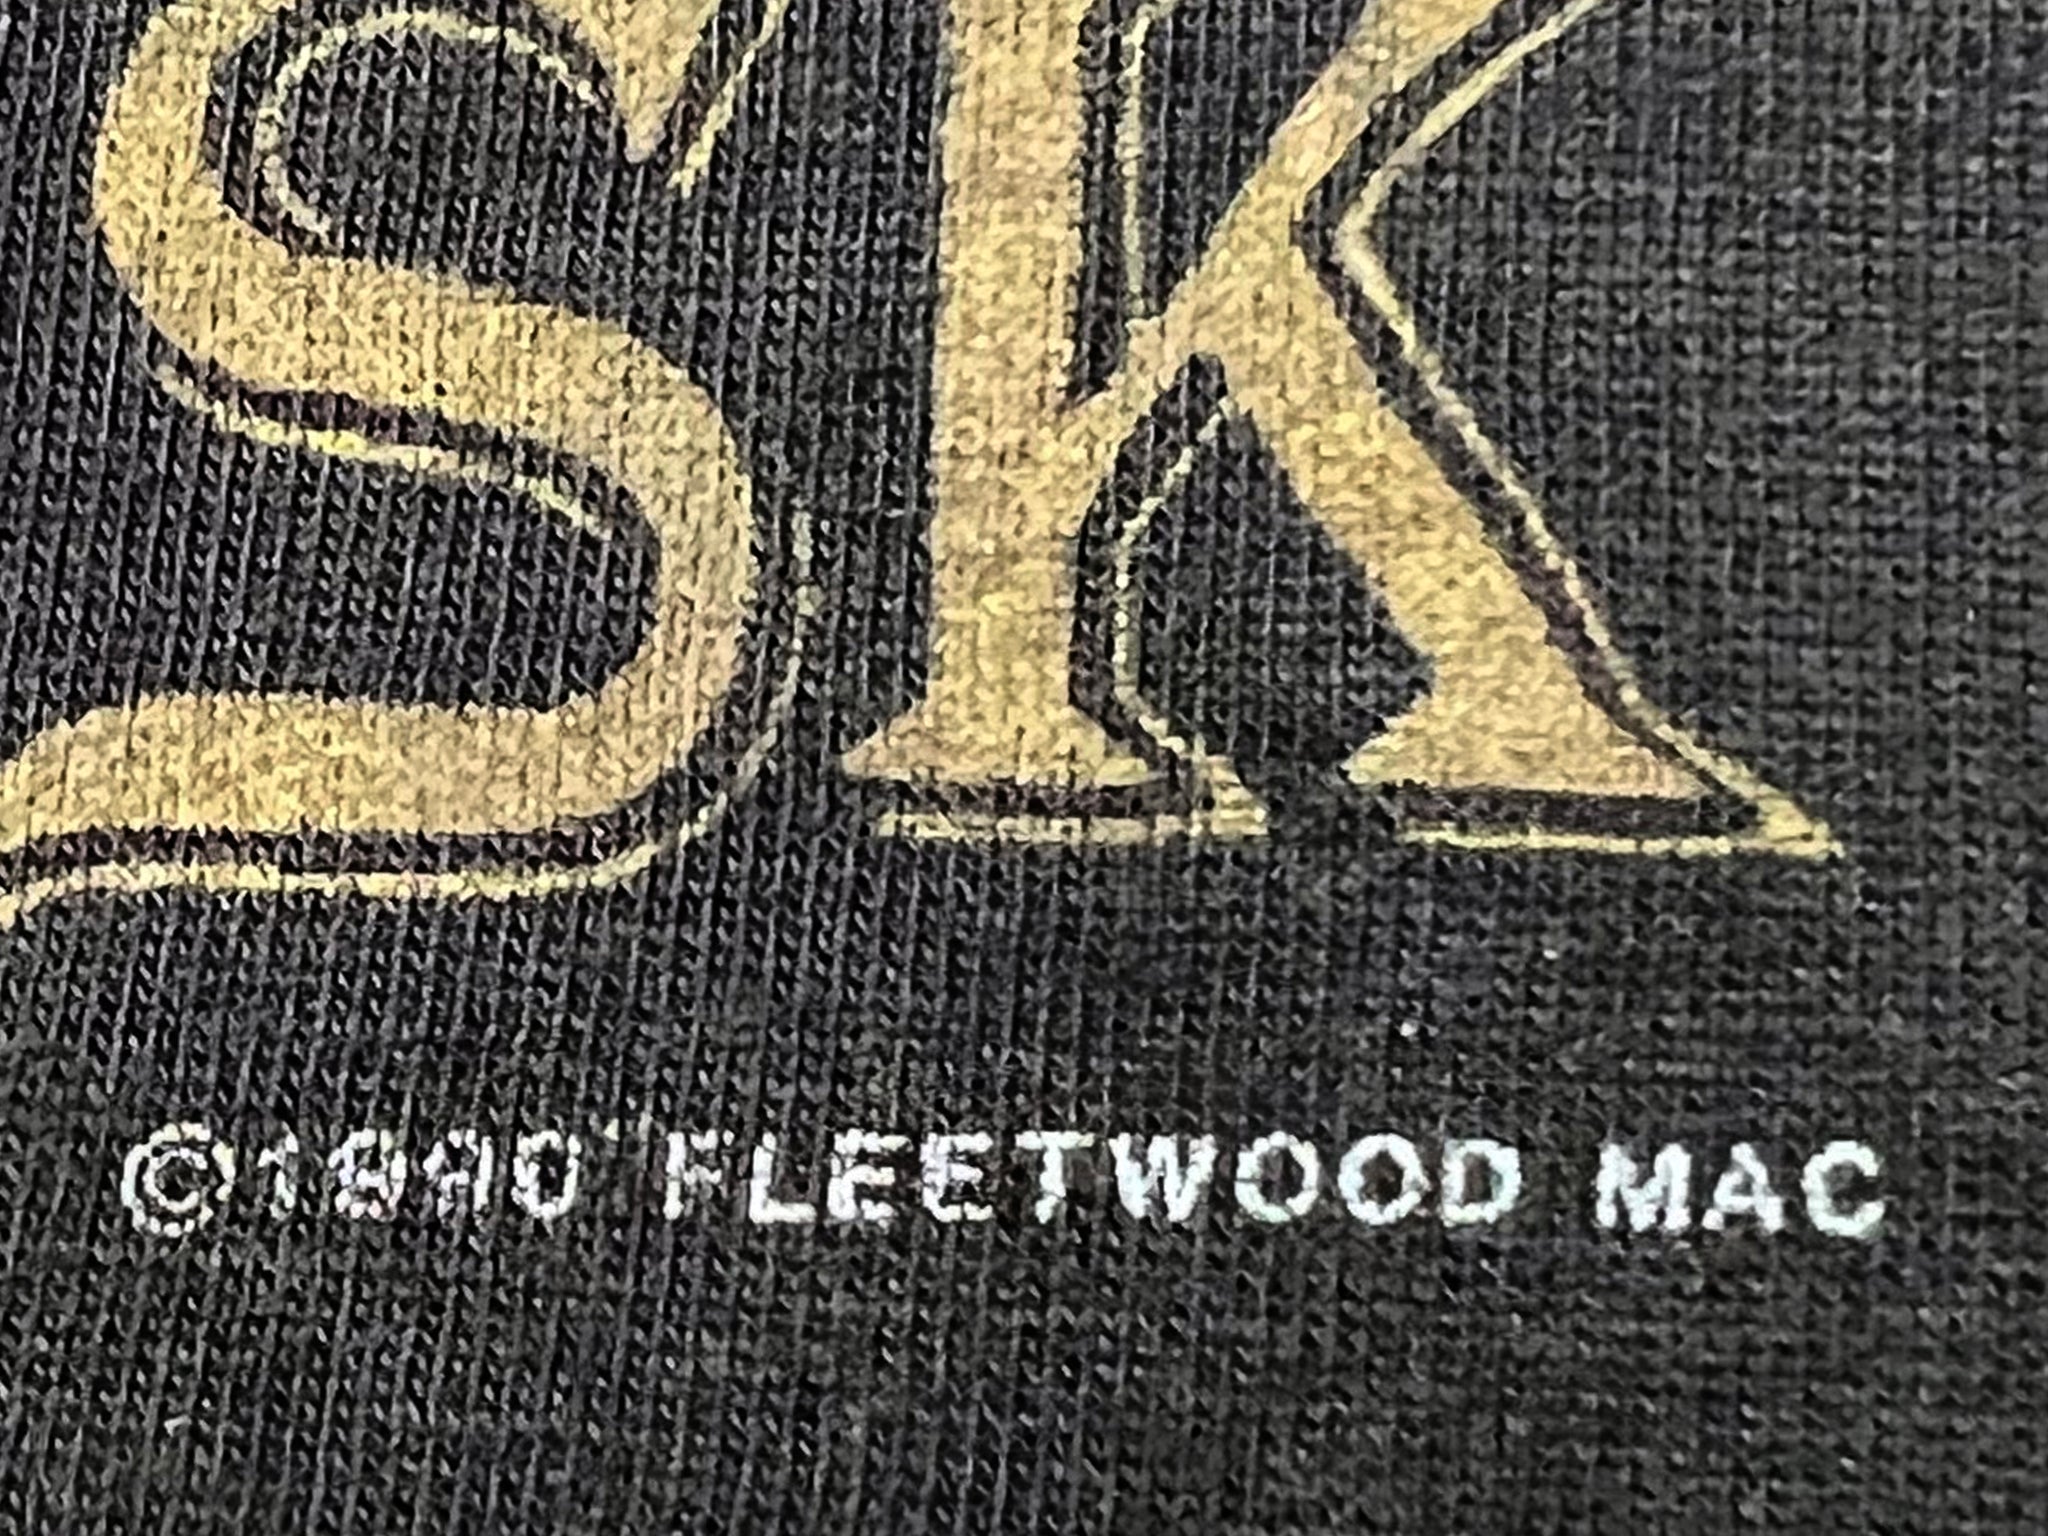 Fleetwood Mac 'Behind the Mask' 1990 Tour T-Shirt